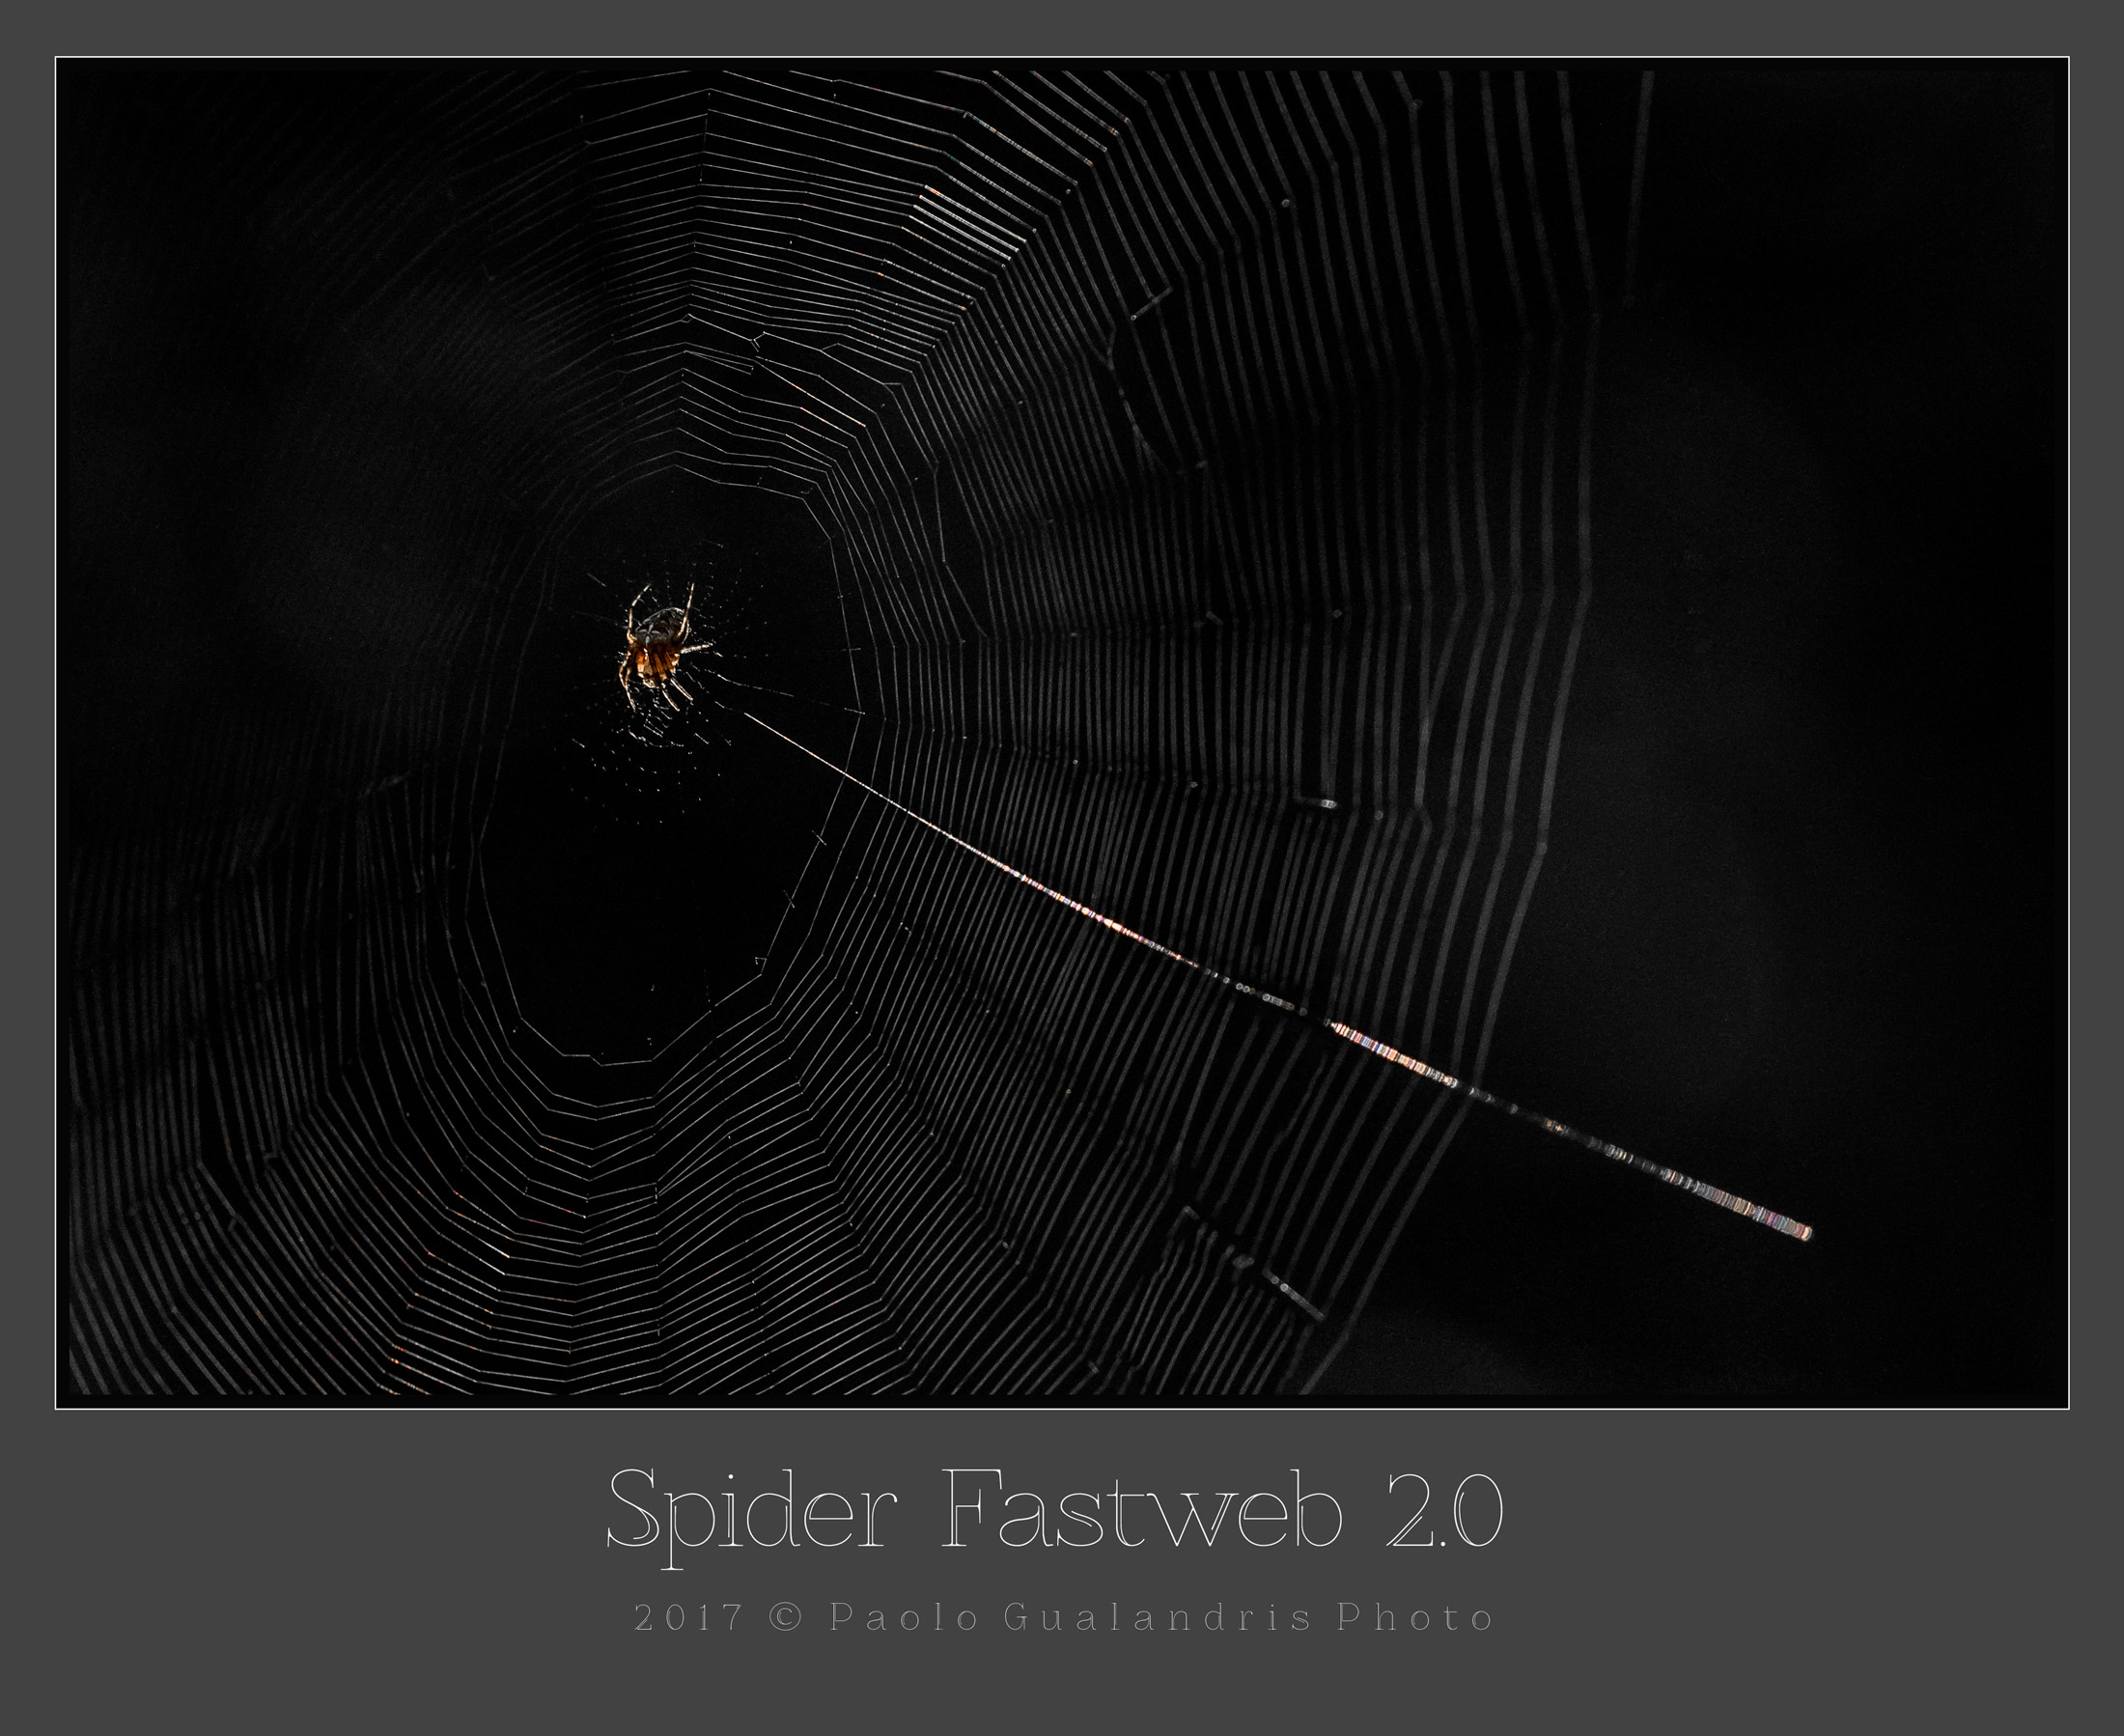 Spider Fastweb 2.0...